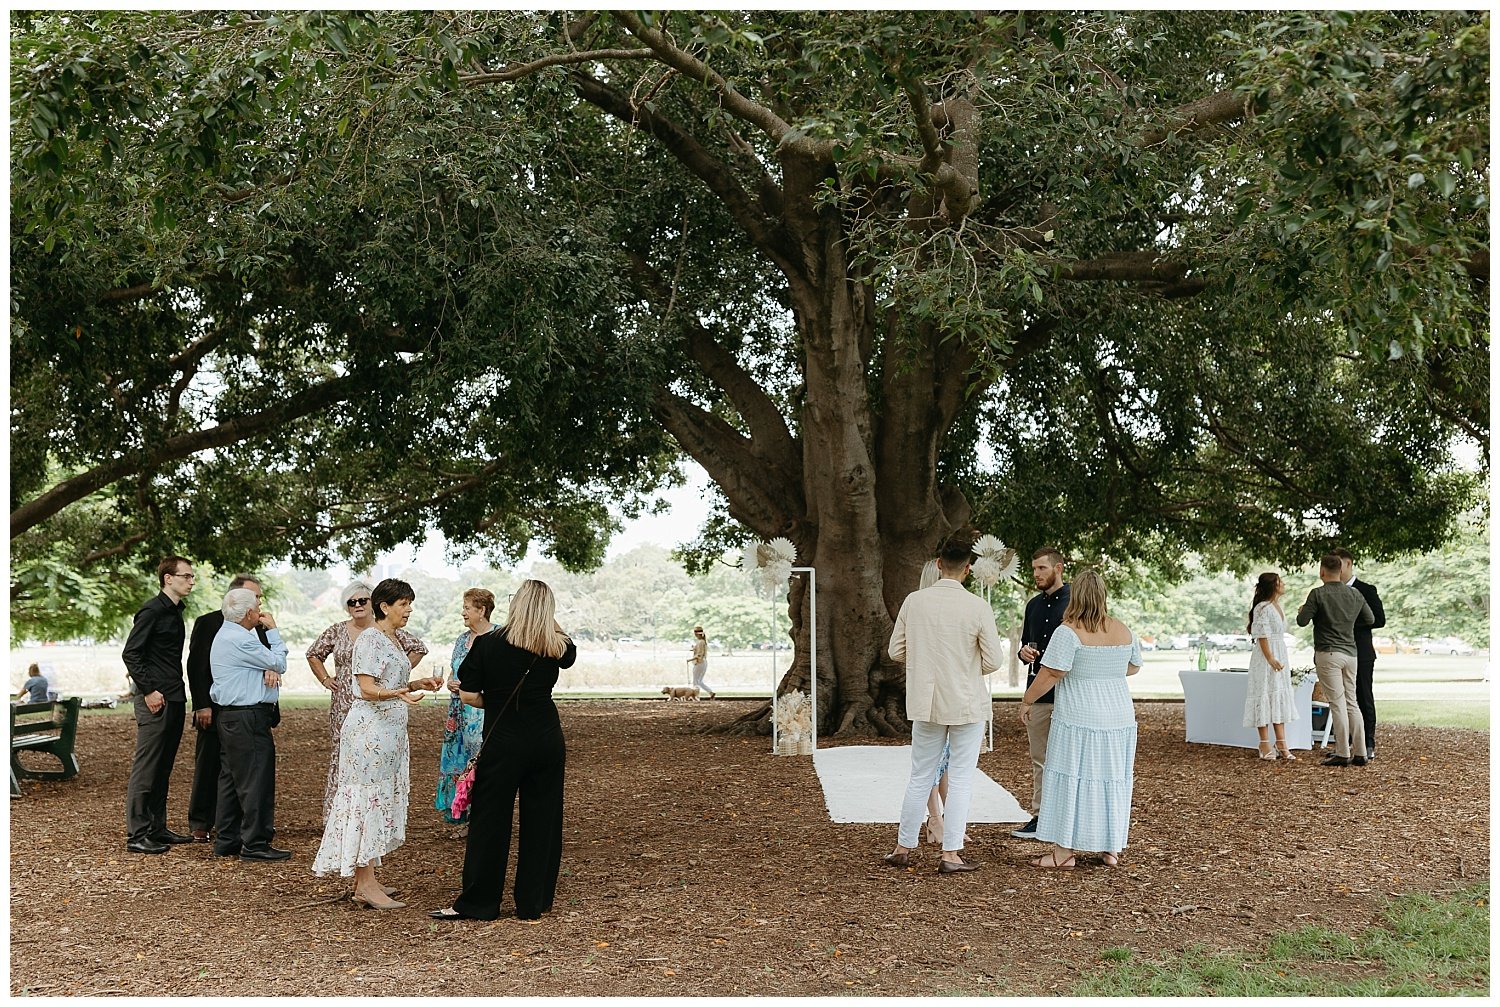 A micro wedding at New Farm Park in Brisbane